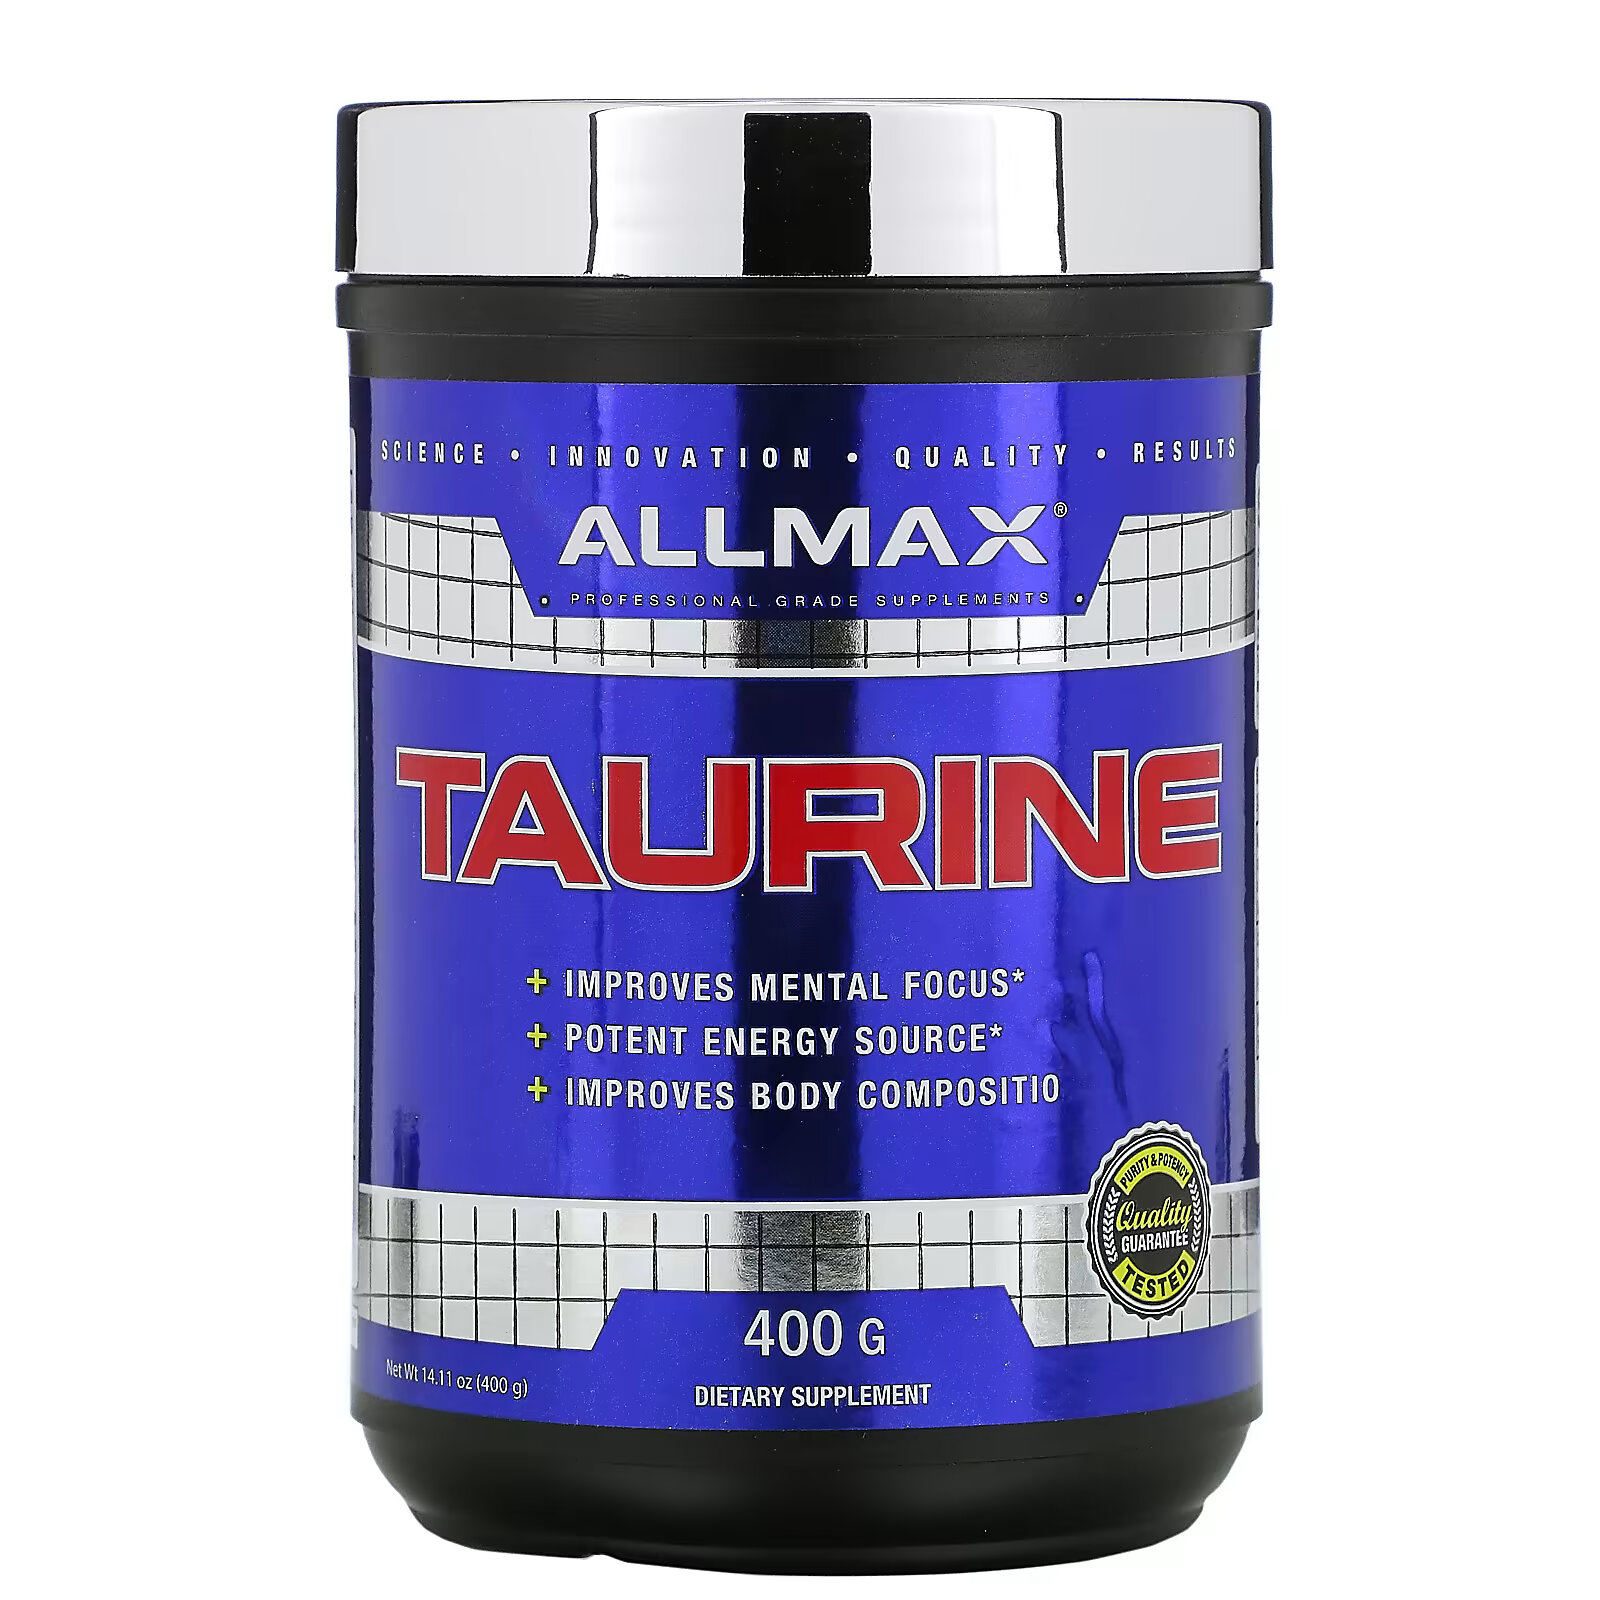 allmax таурин без добавок веганский продукт без глютена 3000 мг 400 г 14 11 унций ALLMAX, Таурин, без добавок, веганский продукт без глютена, 3000 мг, 400 г (14,11 унций)